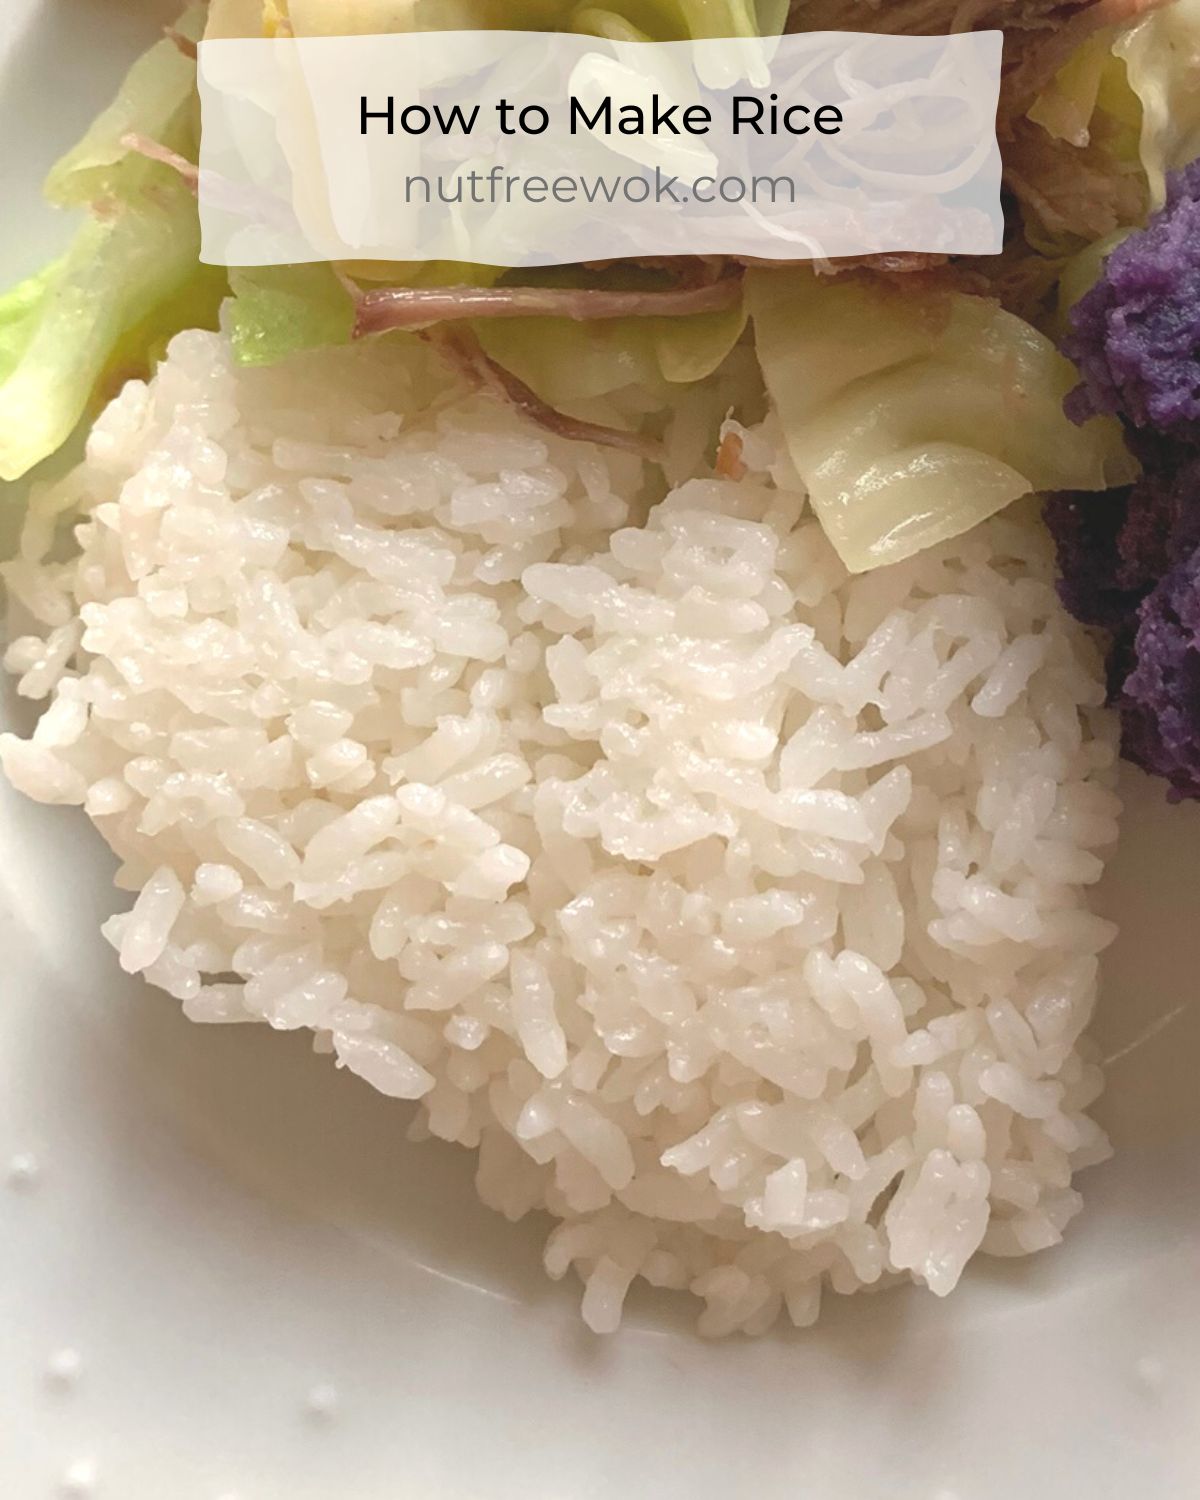 https://nutfreewok.com/wp-content/uploads/2014/03/How-to-Make-Rice.jpg